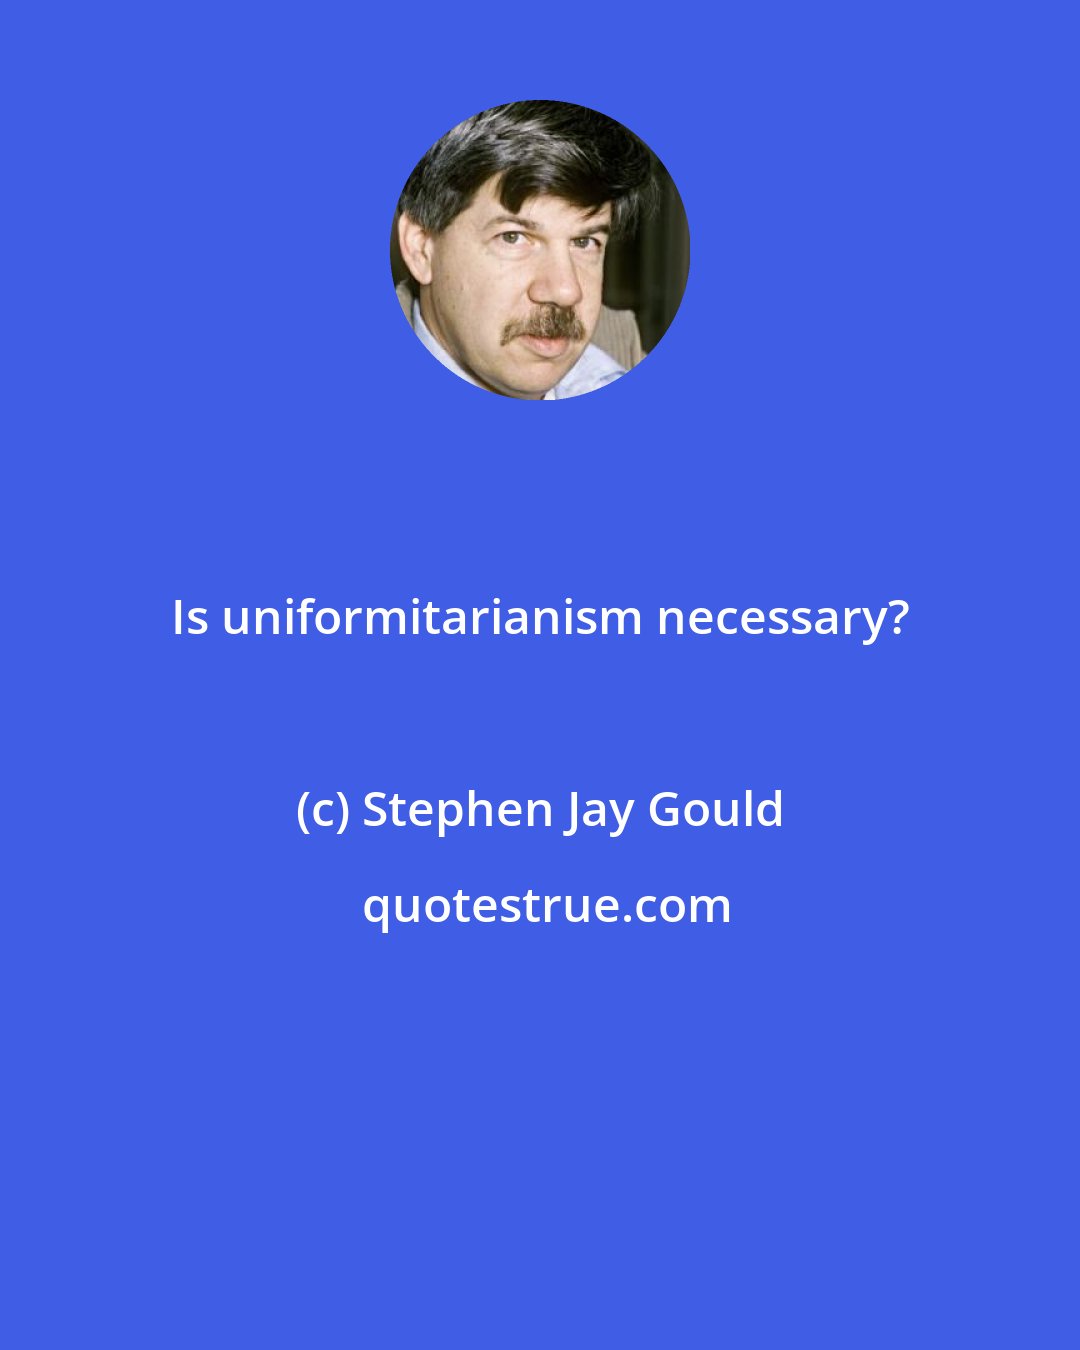 Stephen Jay Gould: Is uniformitarianism necessary?